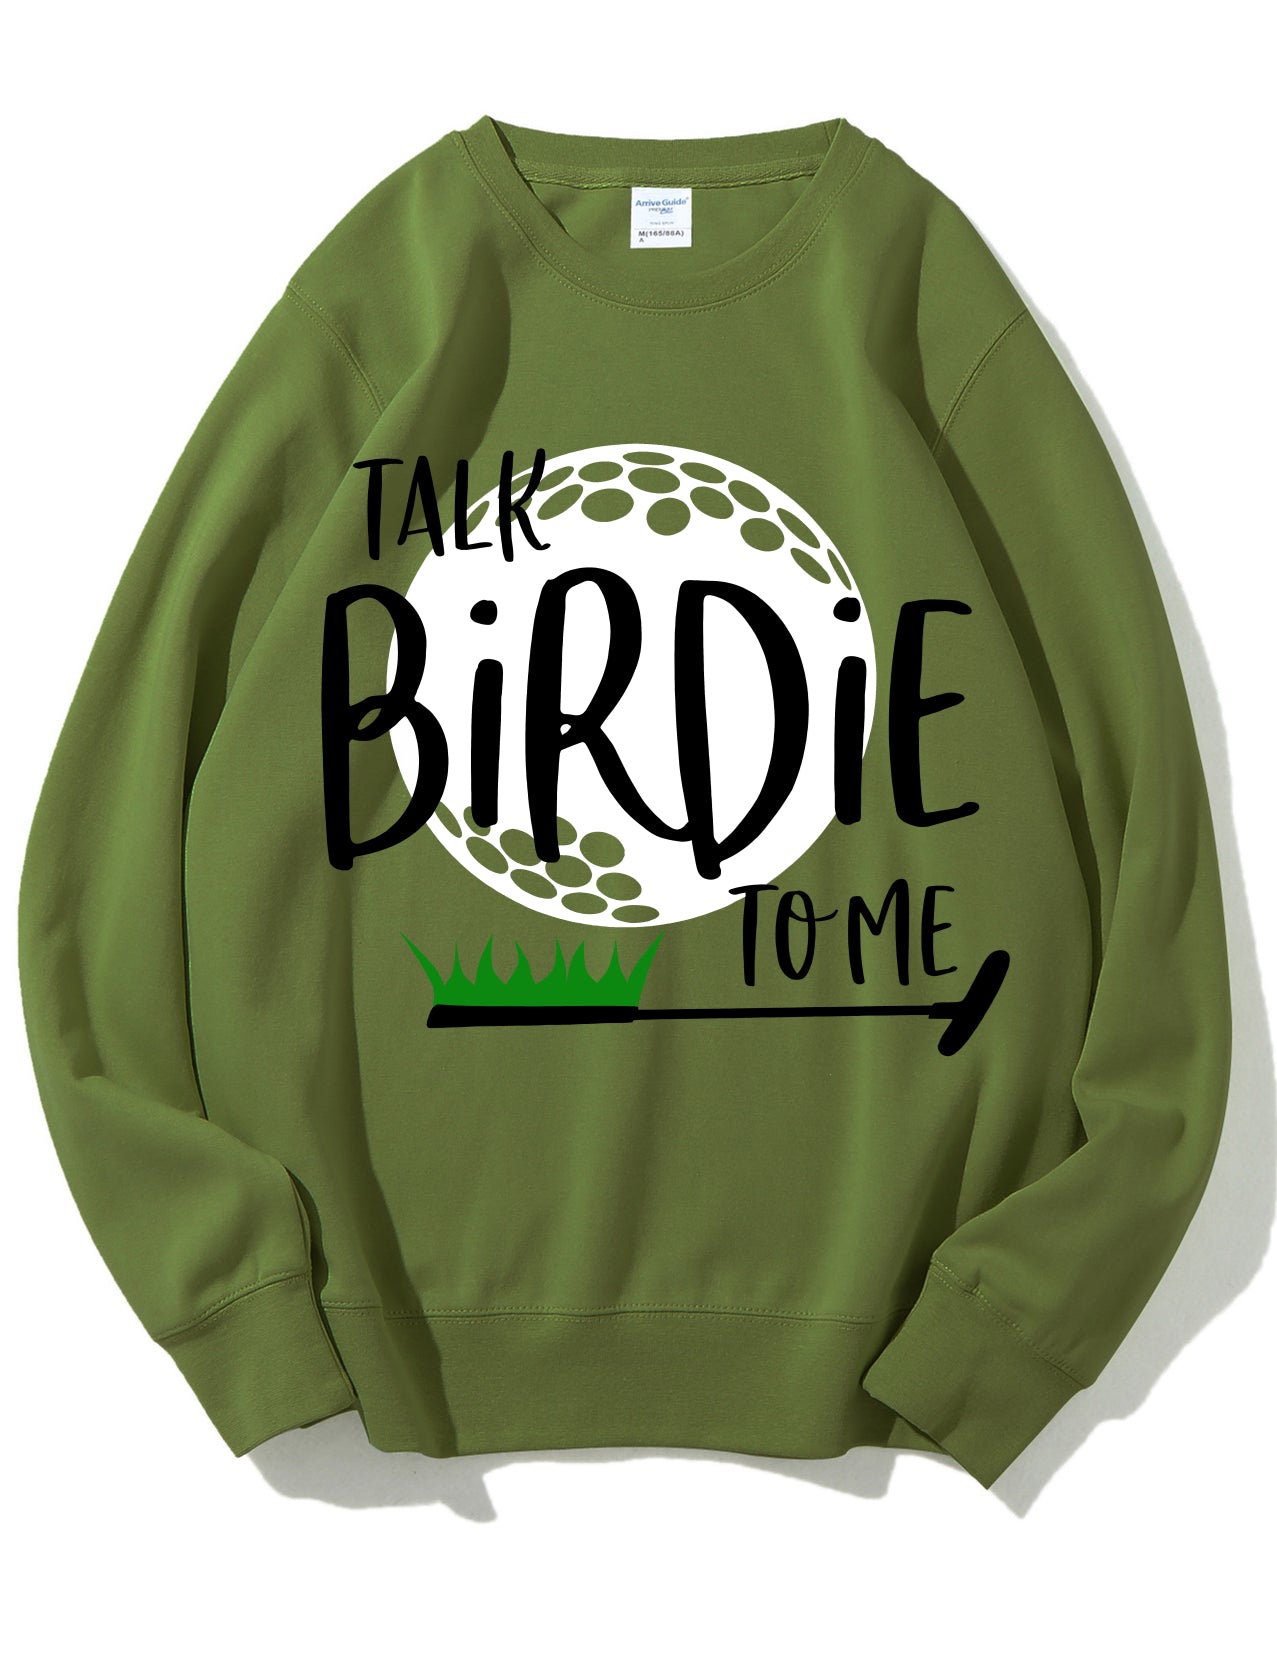 Talk Birdie To Me Funny Golf Sweatshirt